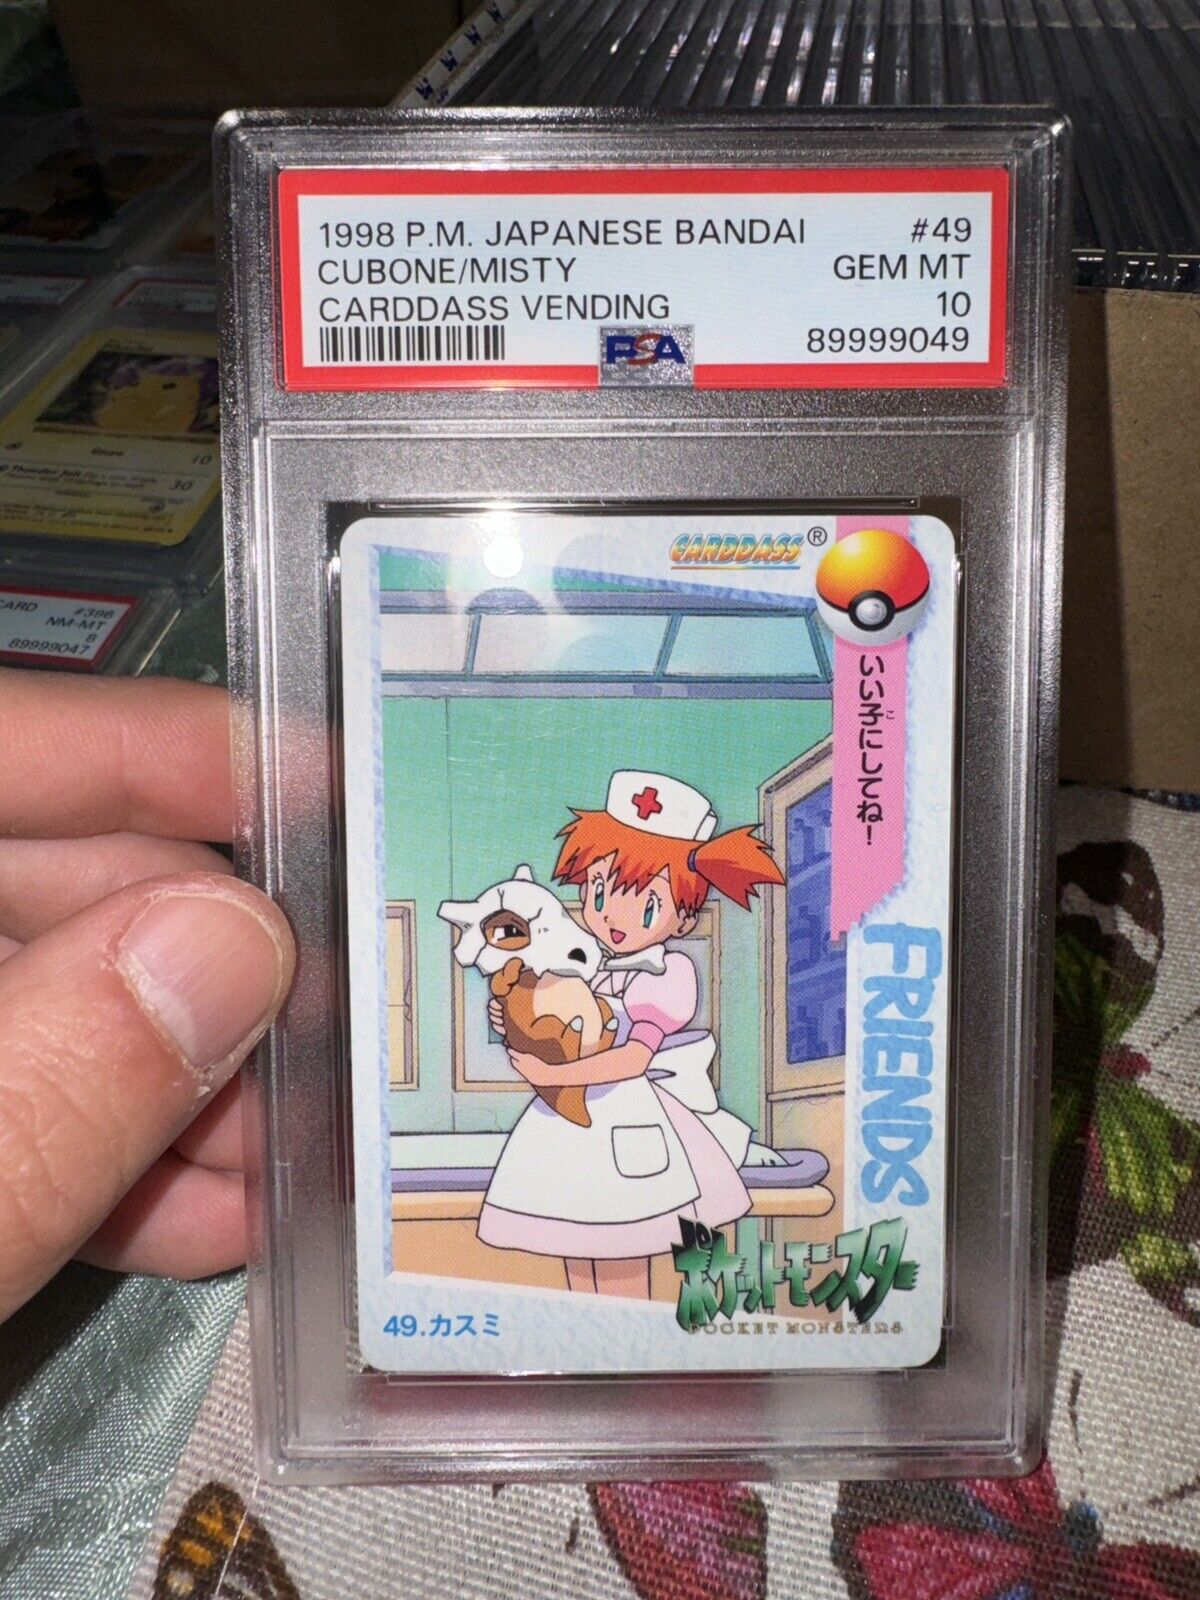 1998 Pokemon Cards Misty & Cubone Bandai Anime Carddass Collection PSA 10 Gem